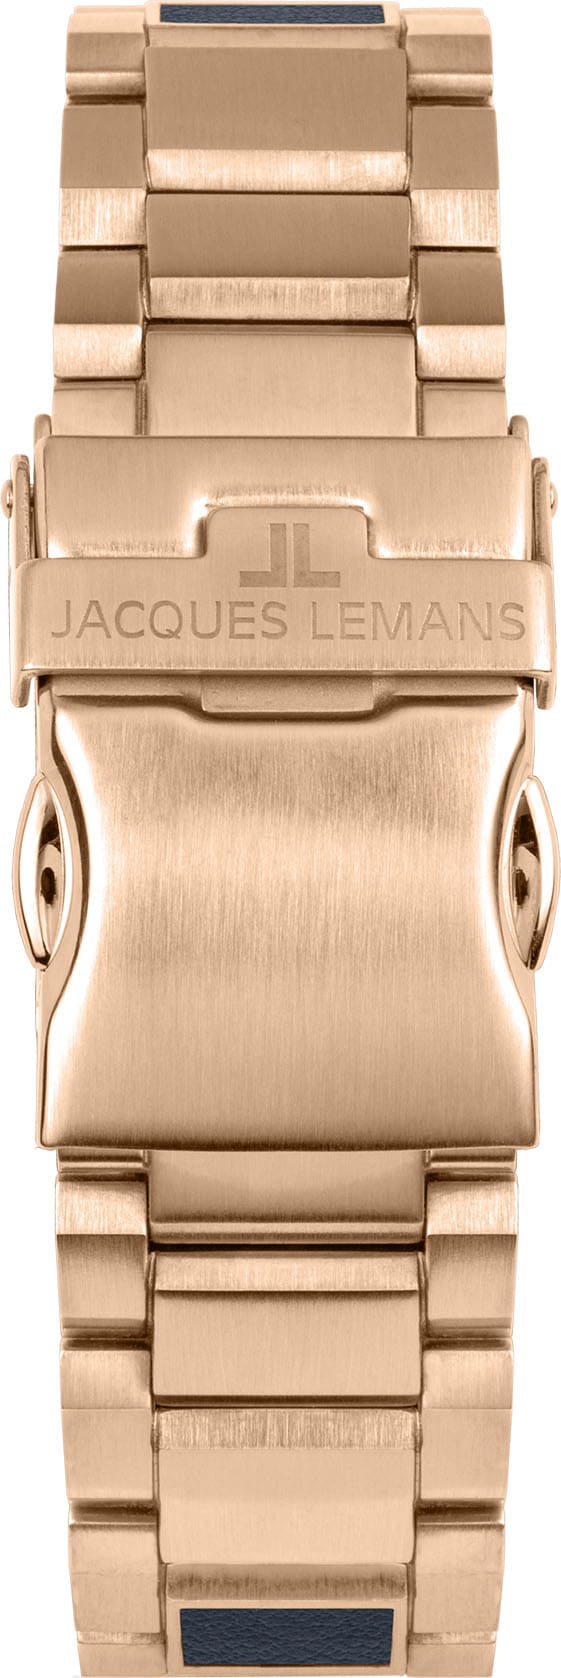 Jacques Lemans Solaruhr »Eco Power, 1-2116F« auf Rechnung kaufen